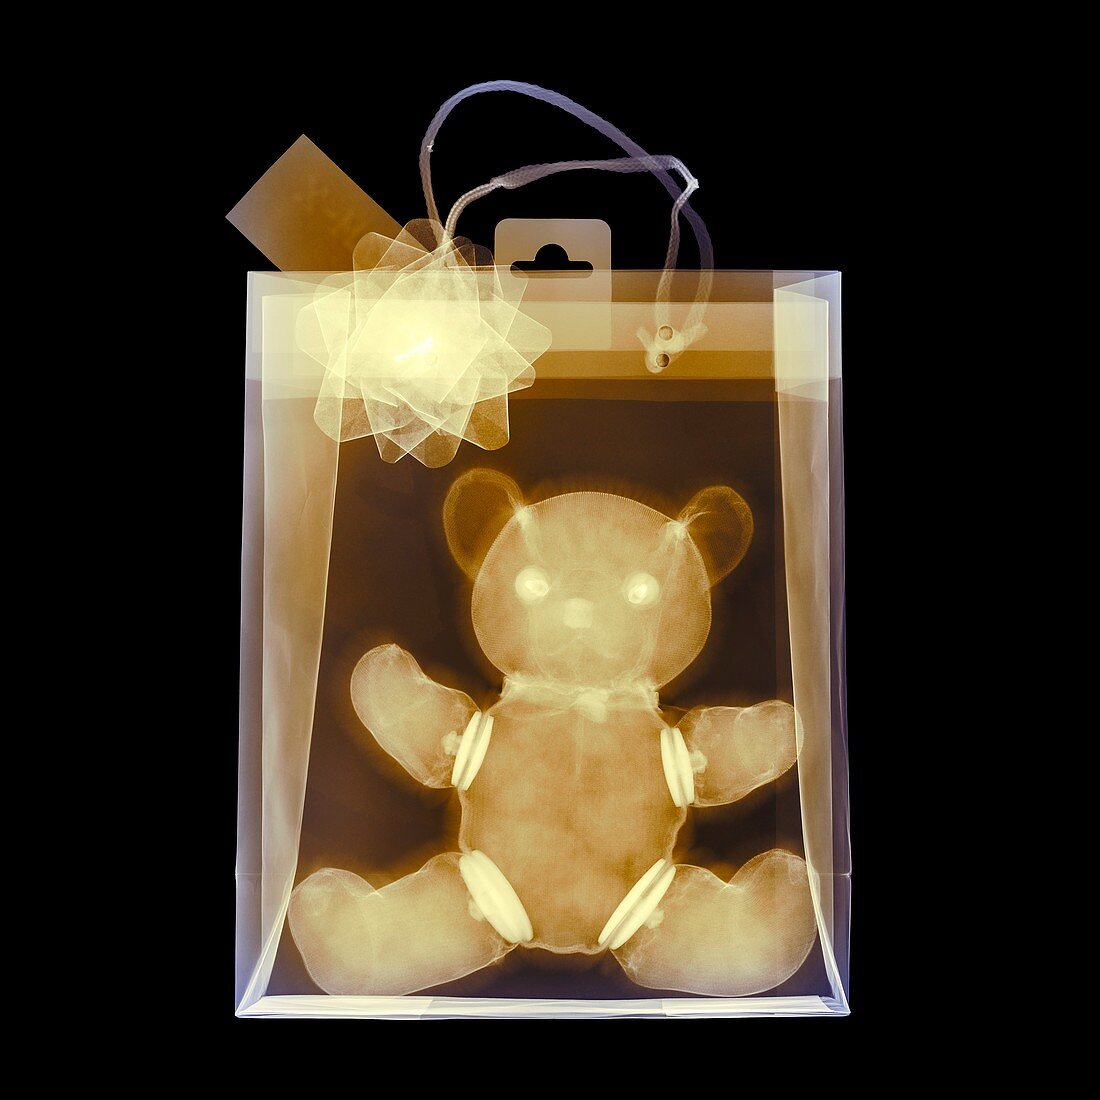 Coloured x-ray of a Teddy bear toy